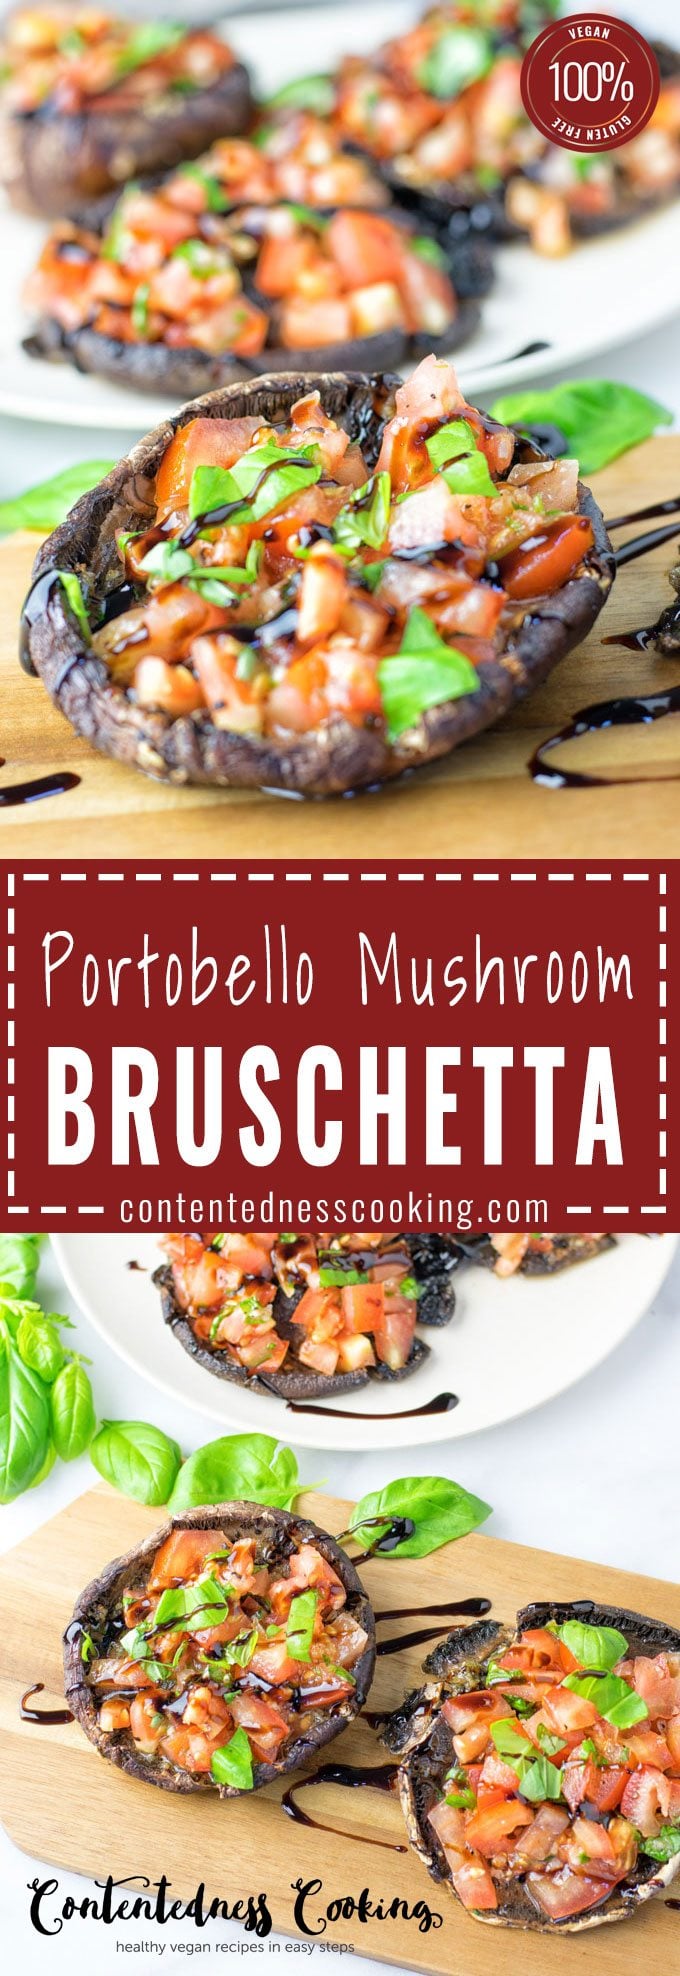 Portobello Mushroom Bruschetta | #vegan #glutenfree #contentednesscooking